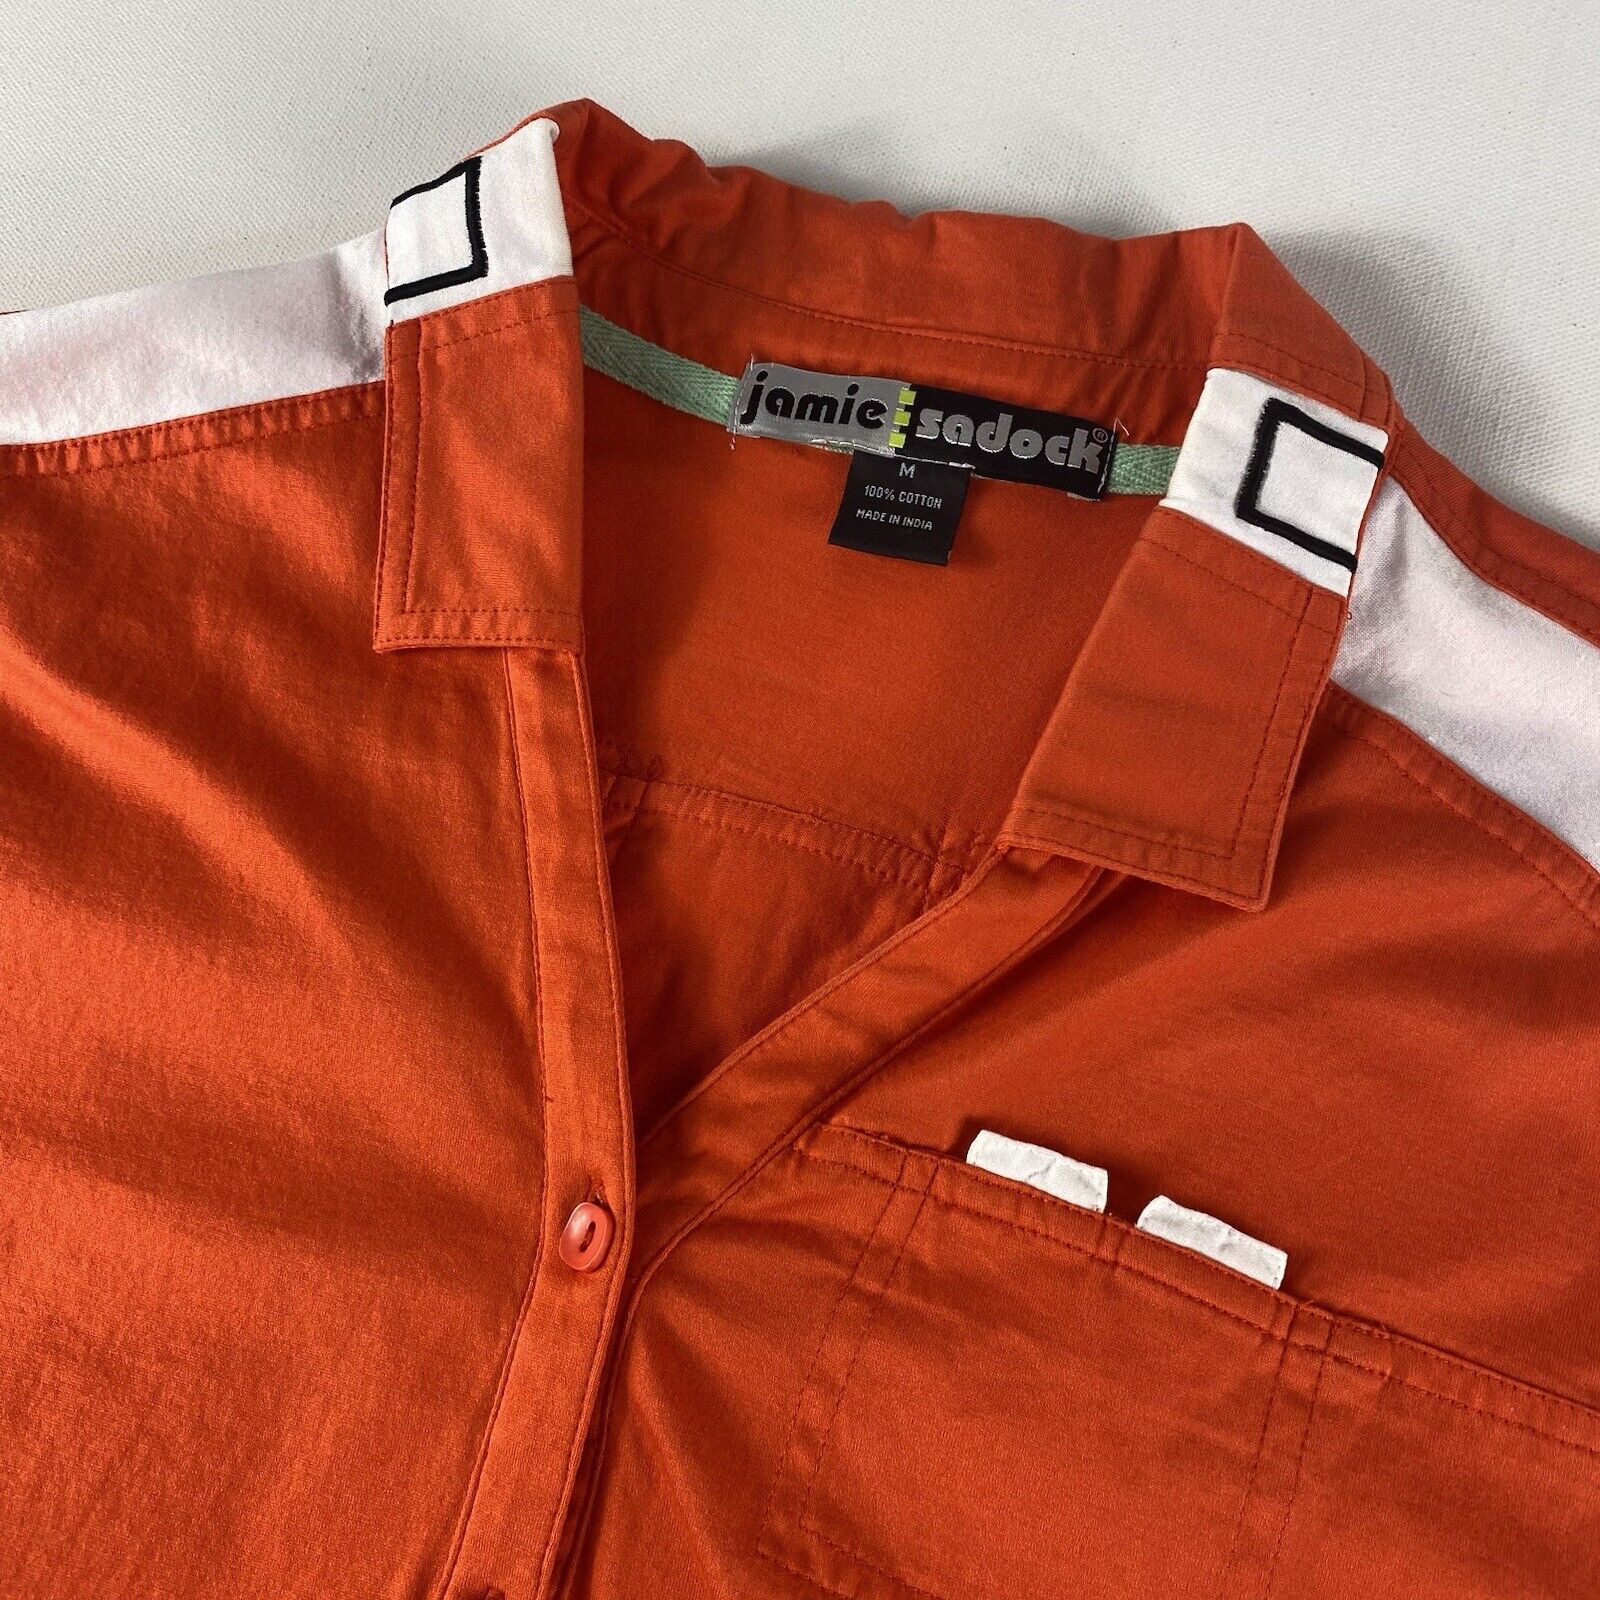 Jamie Sadock Polo Women’s Medium Orange Shirt Gol… - image 2